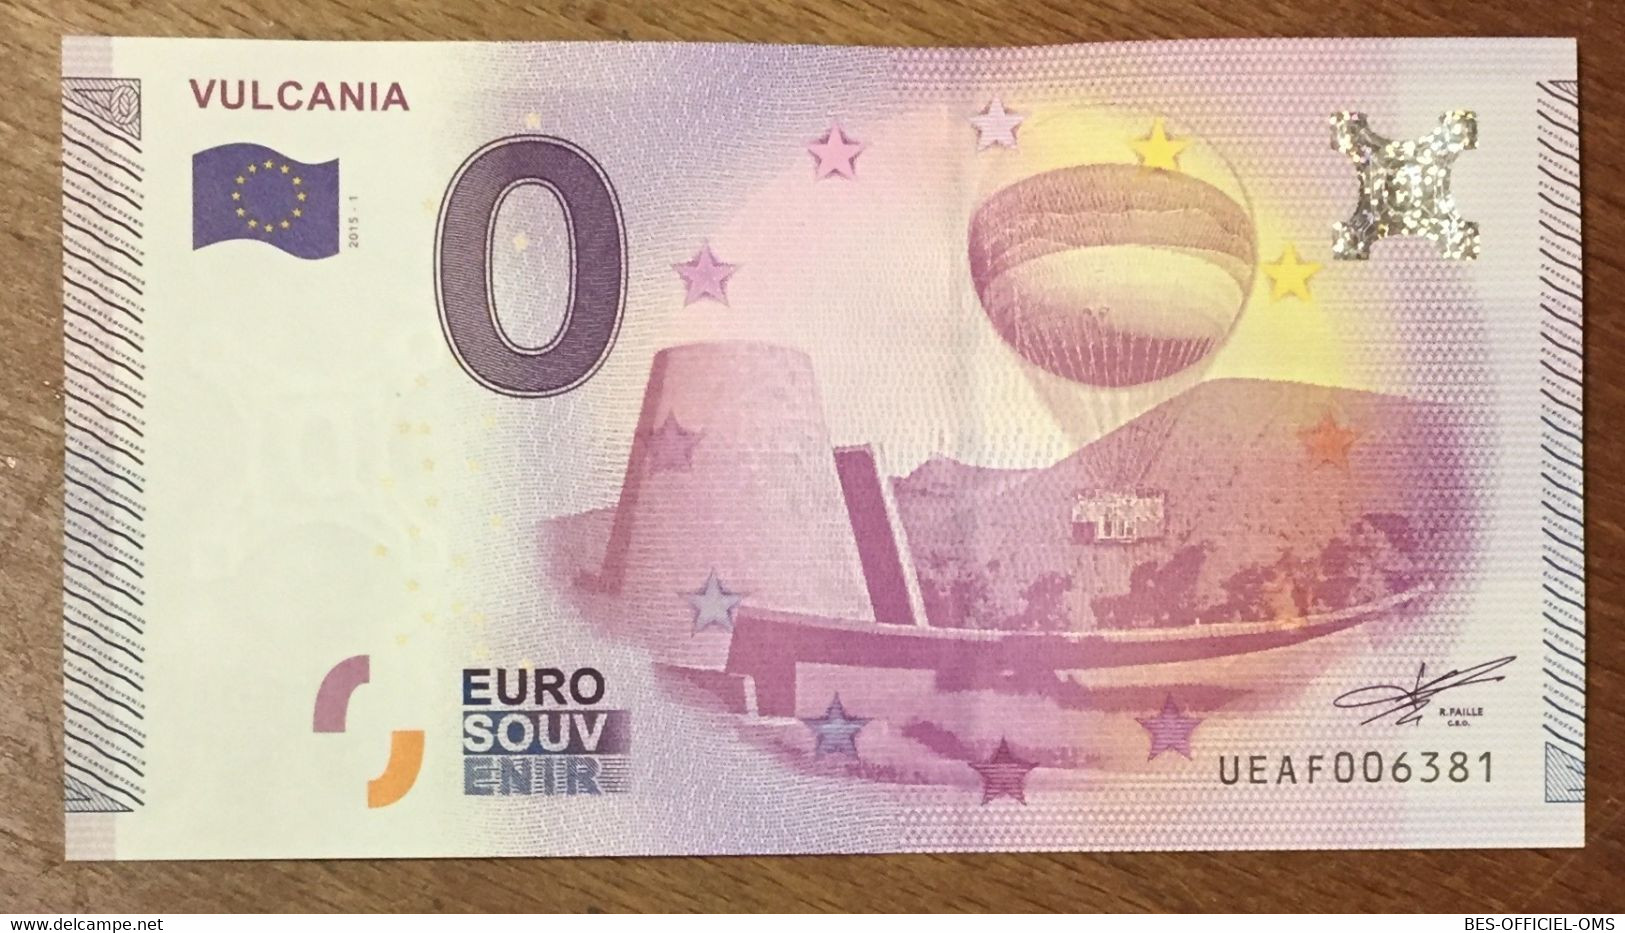 2015 BILLET 0 EURO SOUVENIR DPT 63 VULCANIA ZERO 0 EURO SCHEIN BANKNOTE PAPER MONEY - Private Proofs / Unofficial